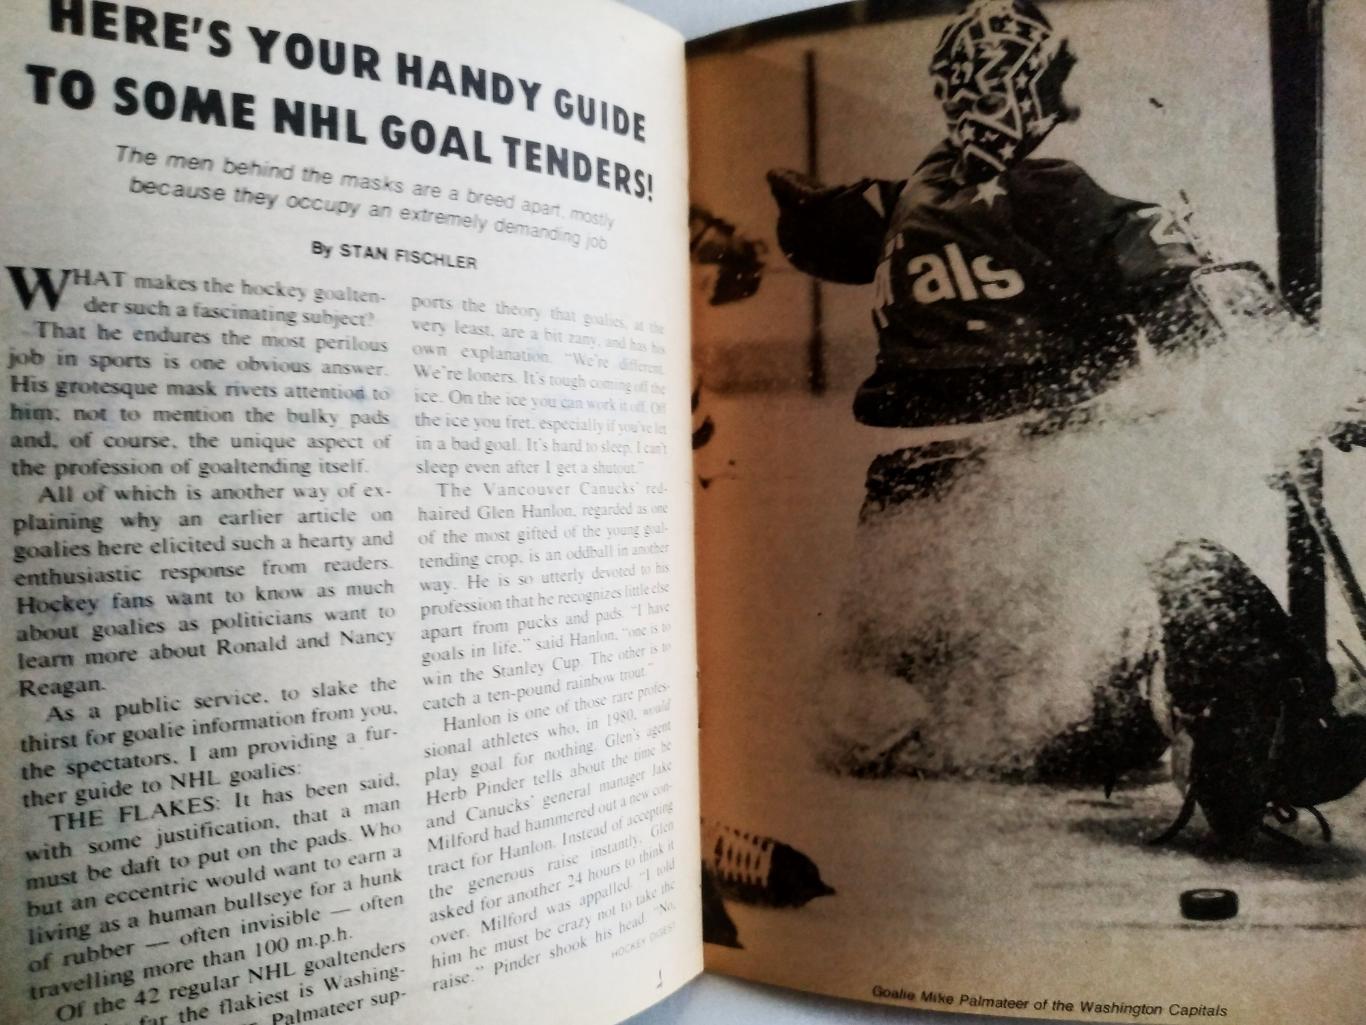 ХОККЕЙ ЖУРНАЛ ЕЖЕМЕСЯЧНИК НХЛ ХОККИ ДАЙДЖЕСТ NHL APRIL 1981 THE HOCKEY DIGEST 4